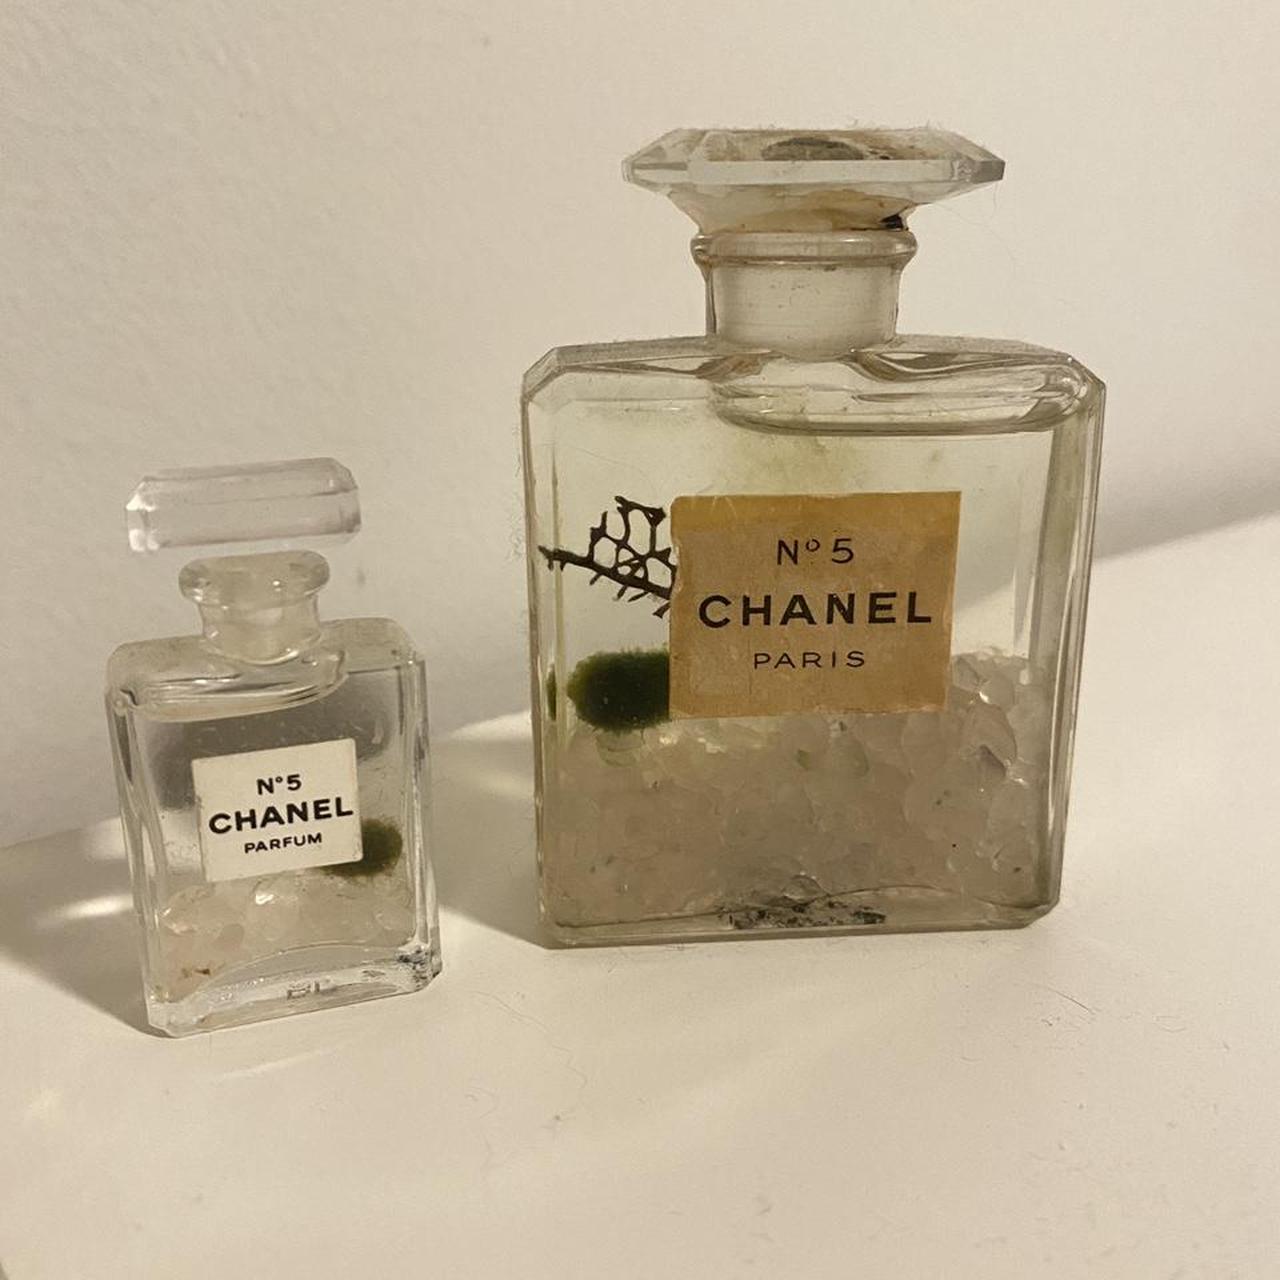 Vintage Chanel Perfume bottles turned into little